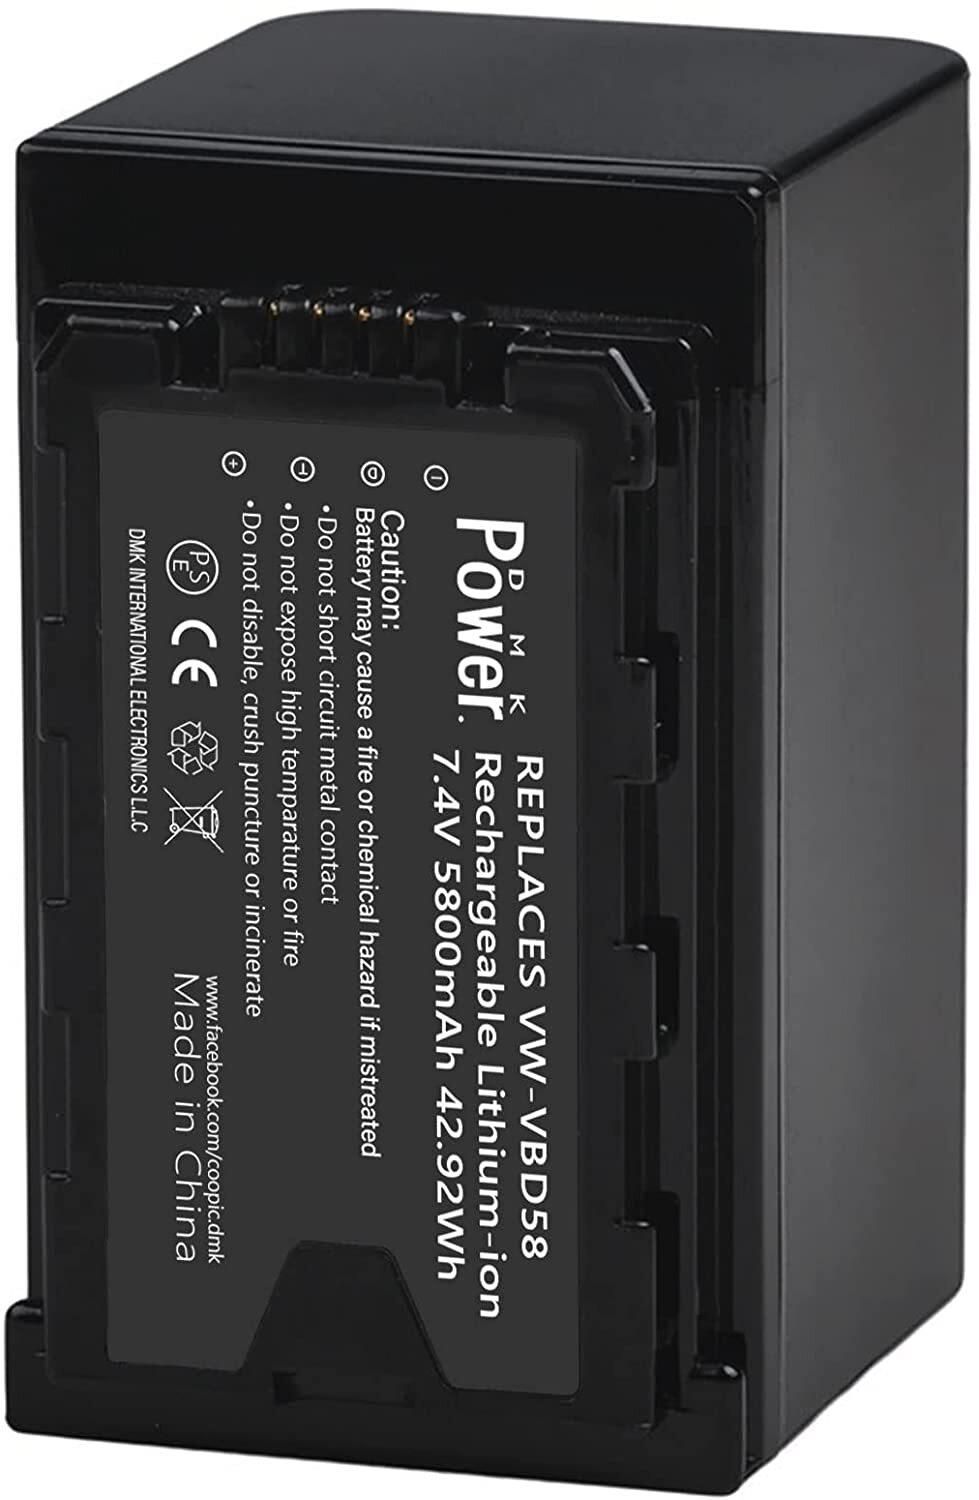 DMK Power VW-VBD58 (5800mAh) Battery Compatible with Panasonic AG-VBR59, BGH1, HC-X1, HC-X1500, HC-X2000, AG-CX10, AG-CX350, AG-UX180, AG-AC30, AG-UX90, AG-DVX200, HC-MDH3E, AJ-PX270, Camcorders